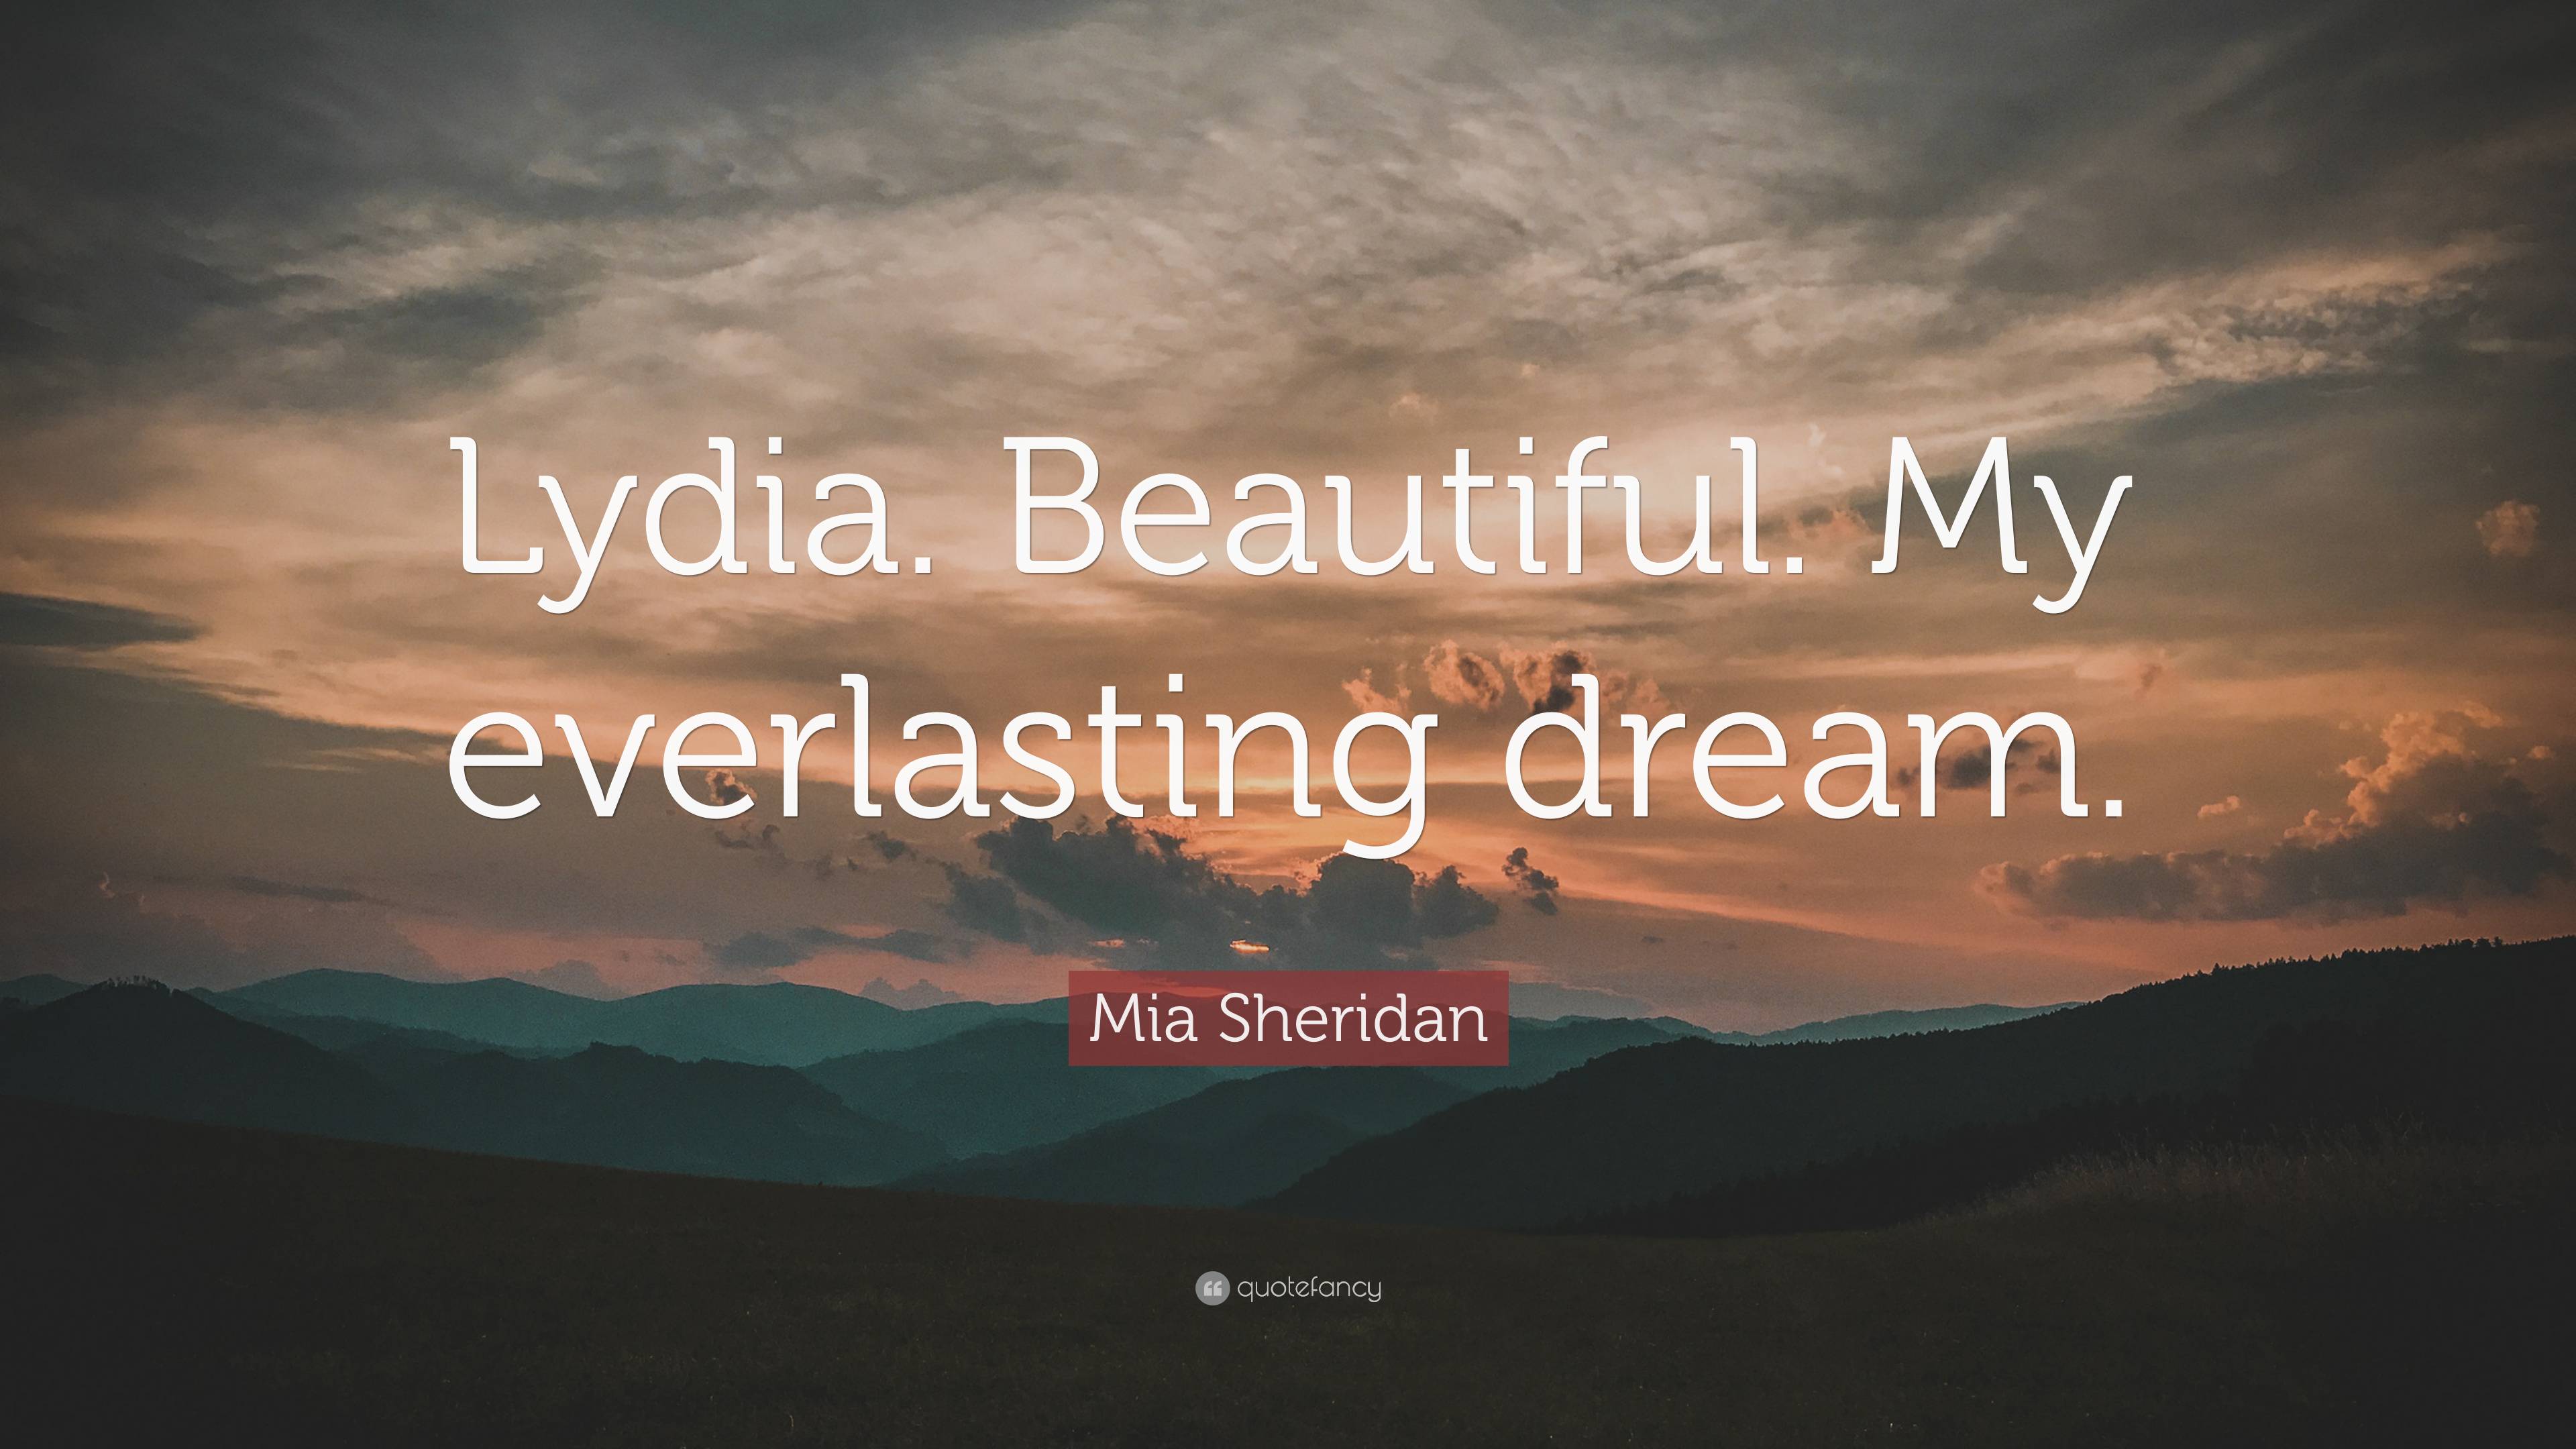 Mia Sheridan Quote: “Lydia. Beautiful. My everlasting dream.”